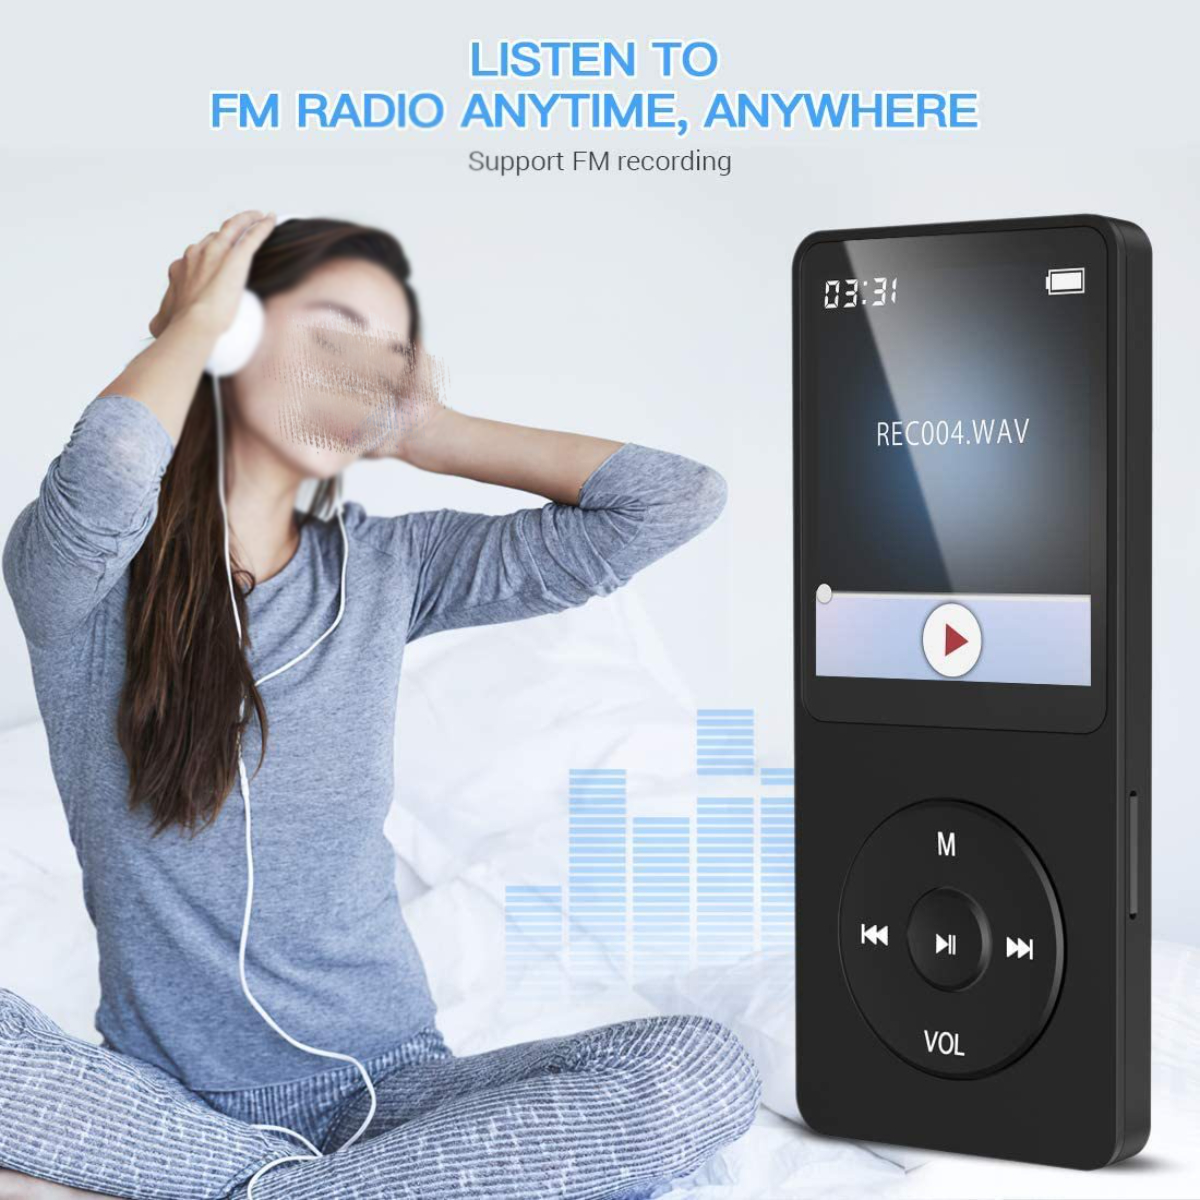 GB, MP3 Edition (64 Musikspieler Walkman schwarz) SYNTEK Walkman MP3/MP4 Ebook Bluetooth Player Student Player